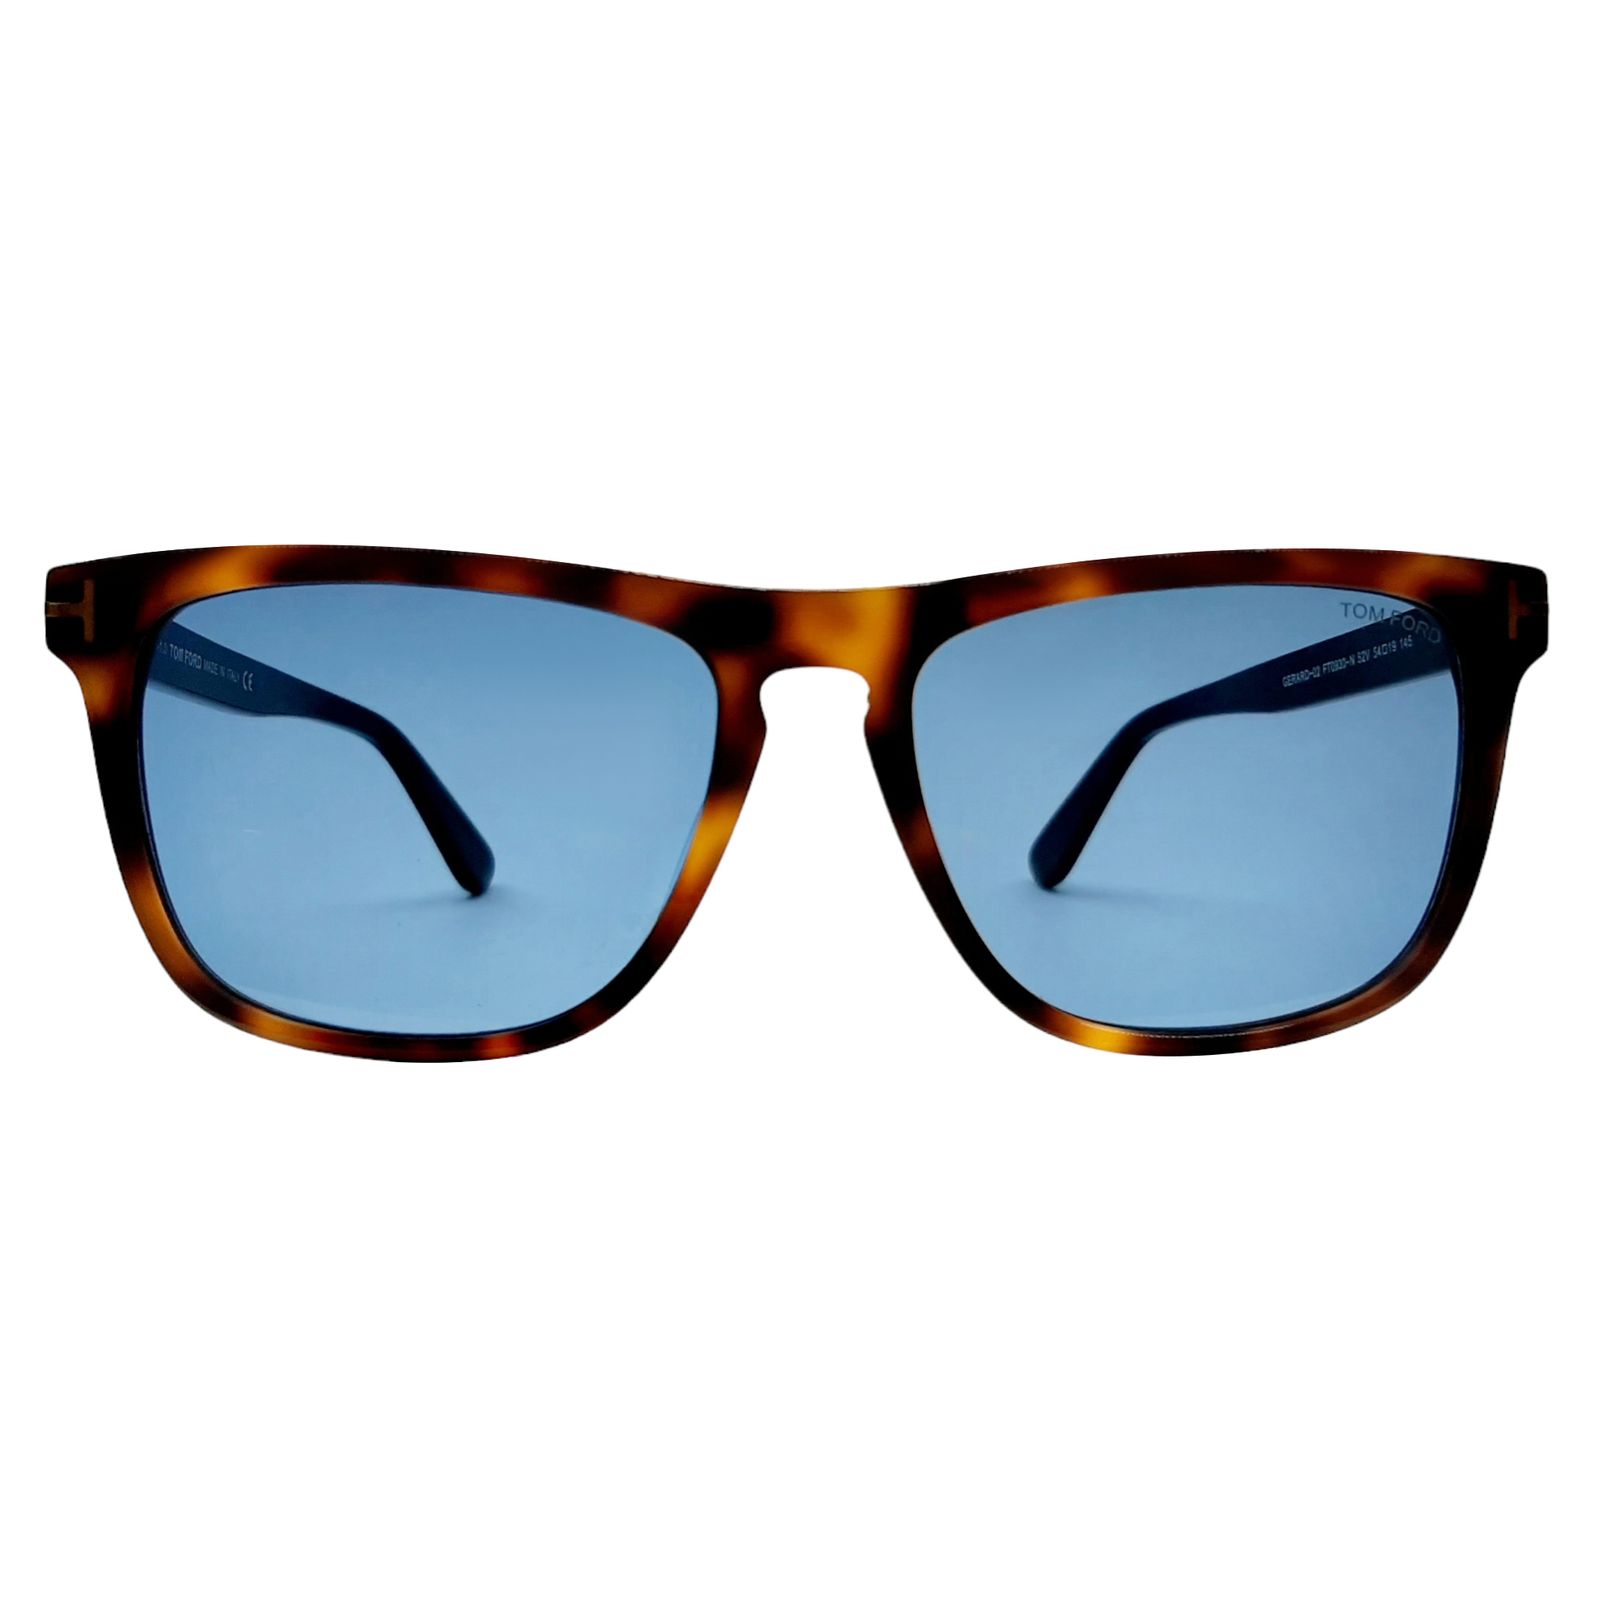 عینک آفتابی تام فورد مدل GERARD02-FT0930N-52v